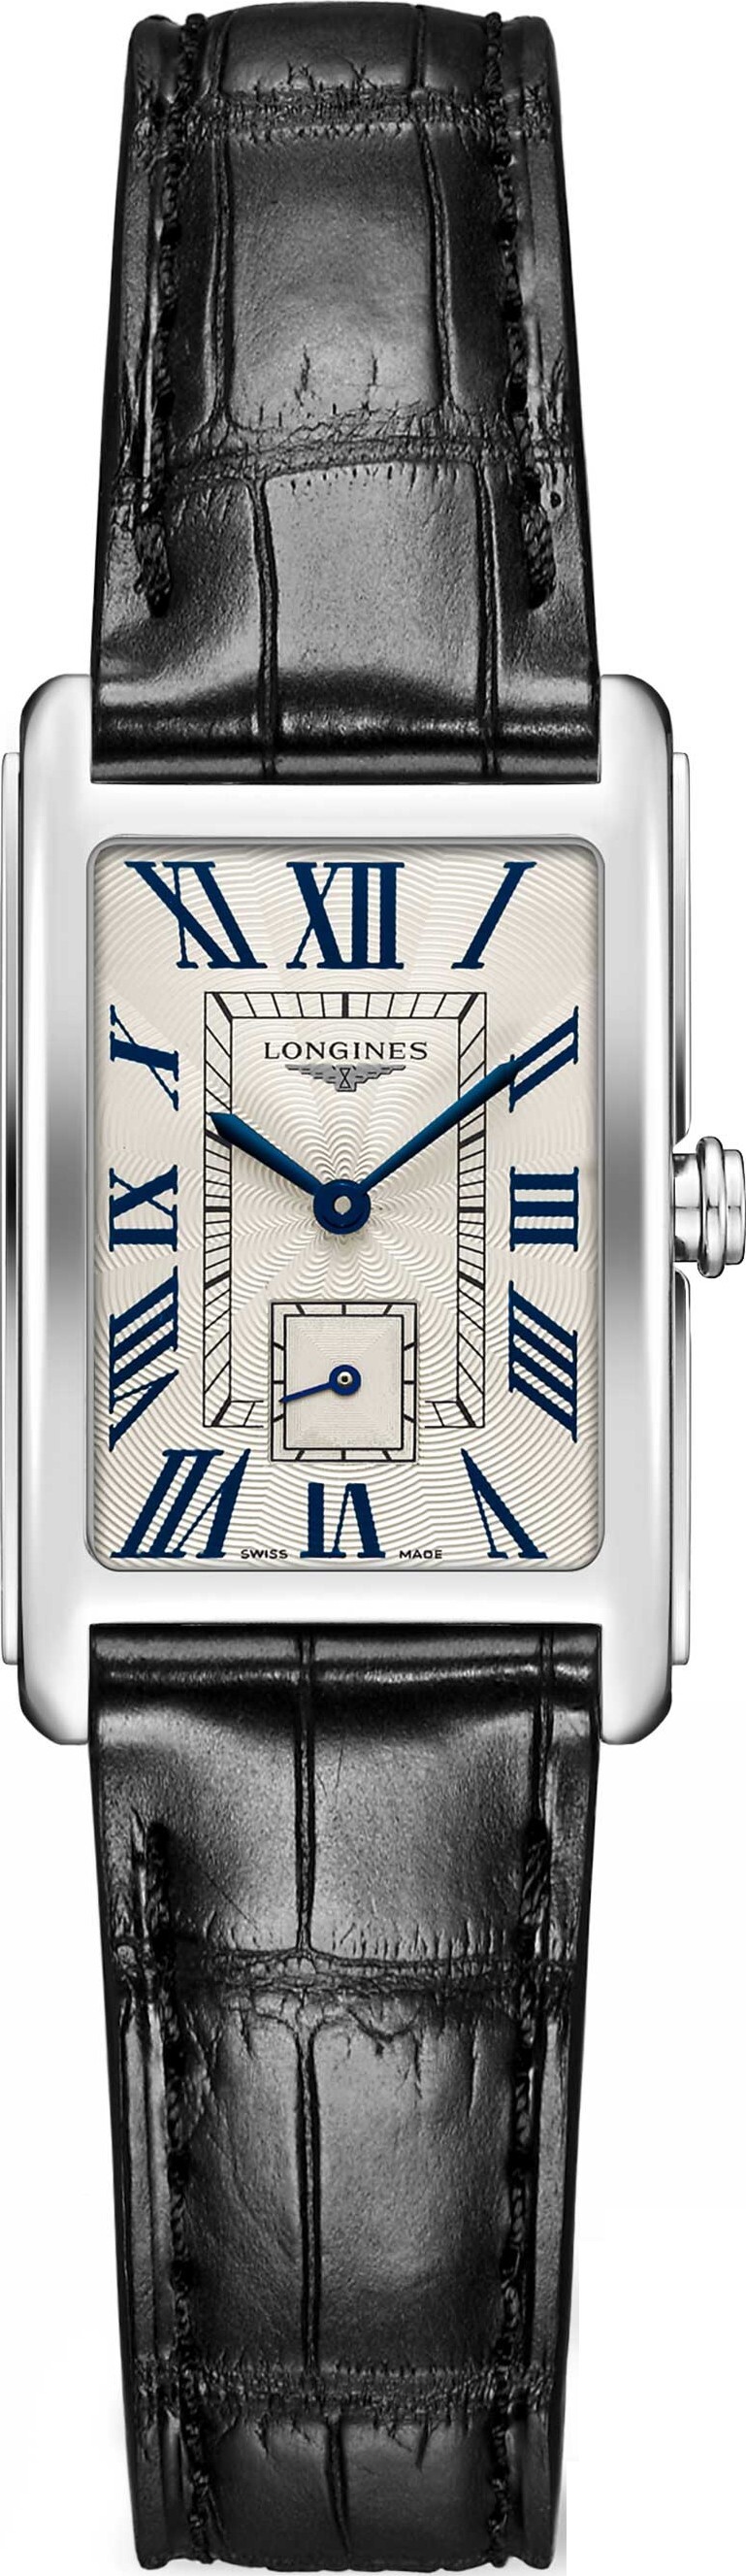 Đồng hồ nữ Longines L5.255.4.71.0